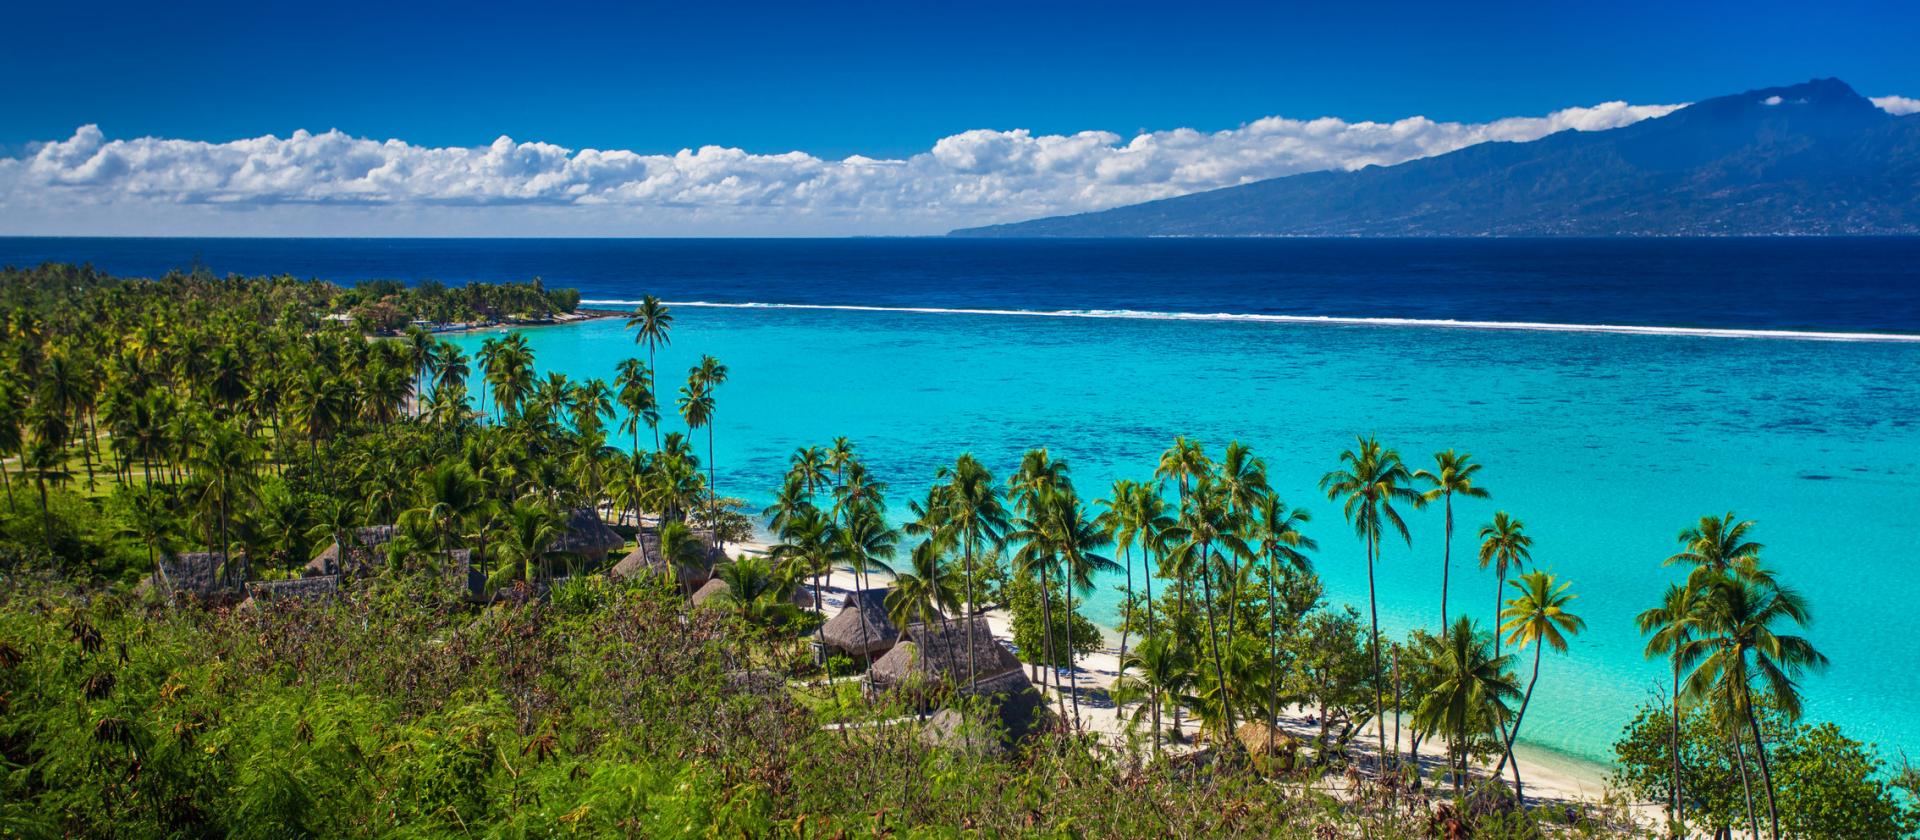 Widok z Moorea na większą sąsiadkę - Tahiti